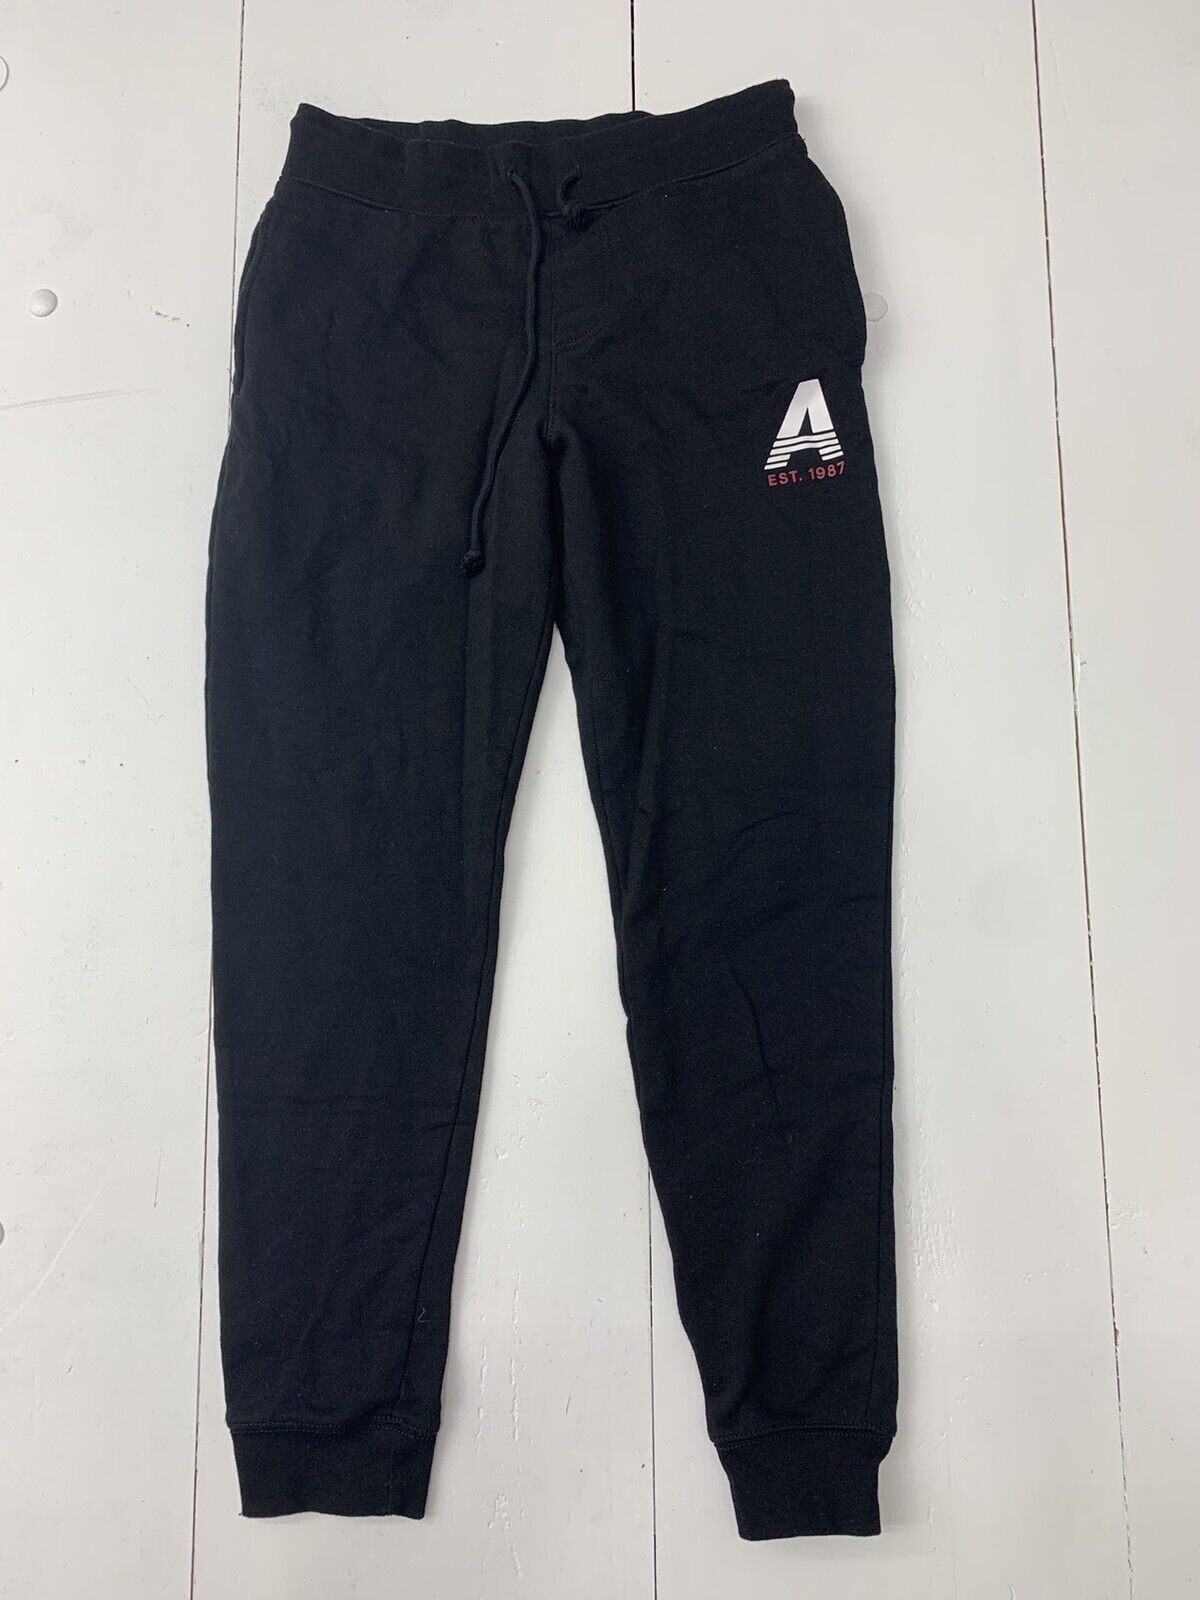 NWT Aeropostale Men's Solid Black Cinched Sweatpants